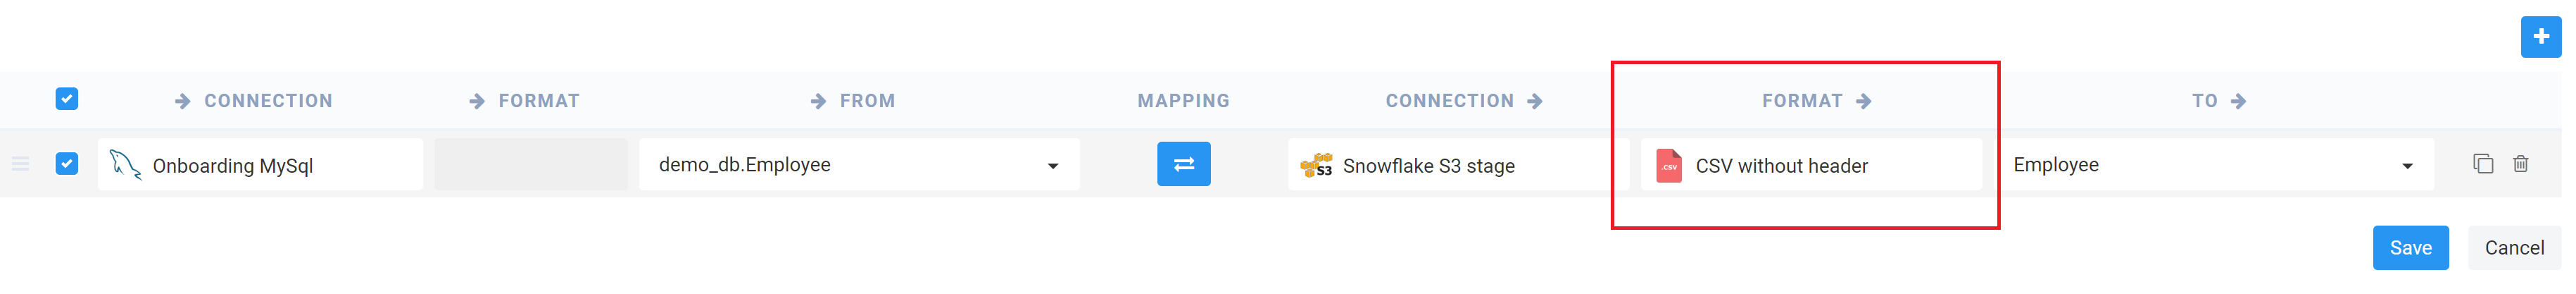 snowflake-format.png